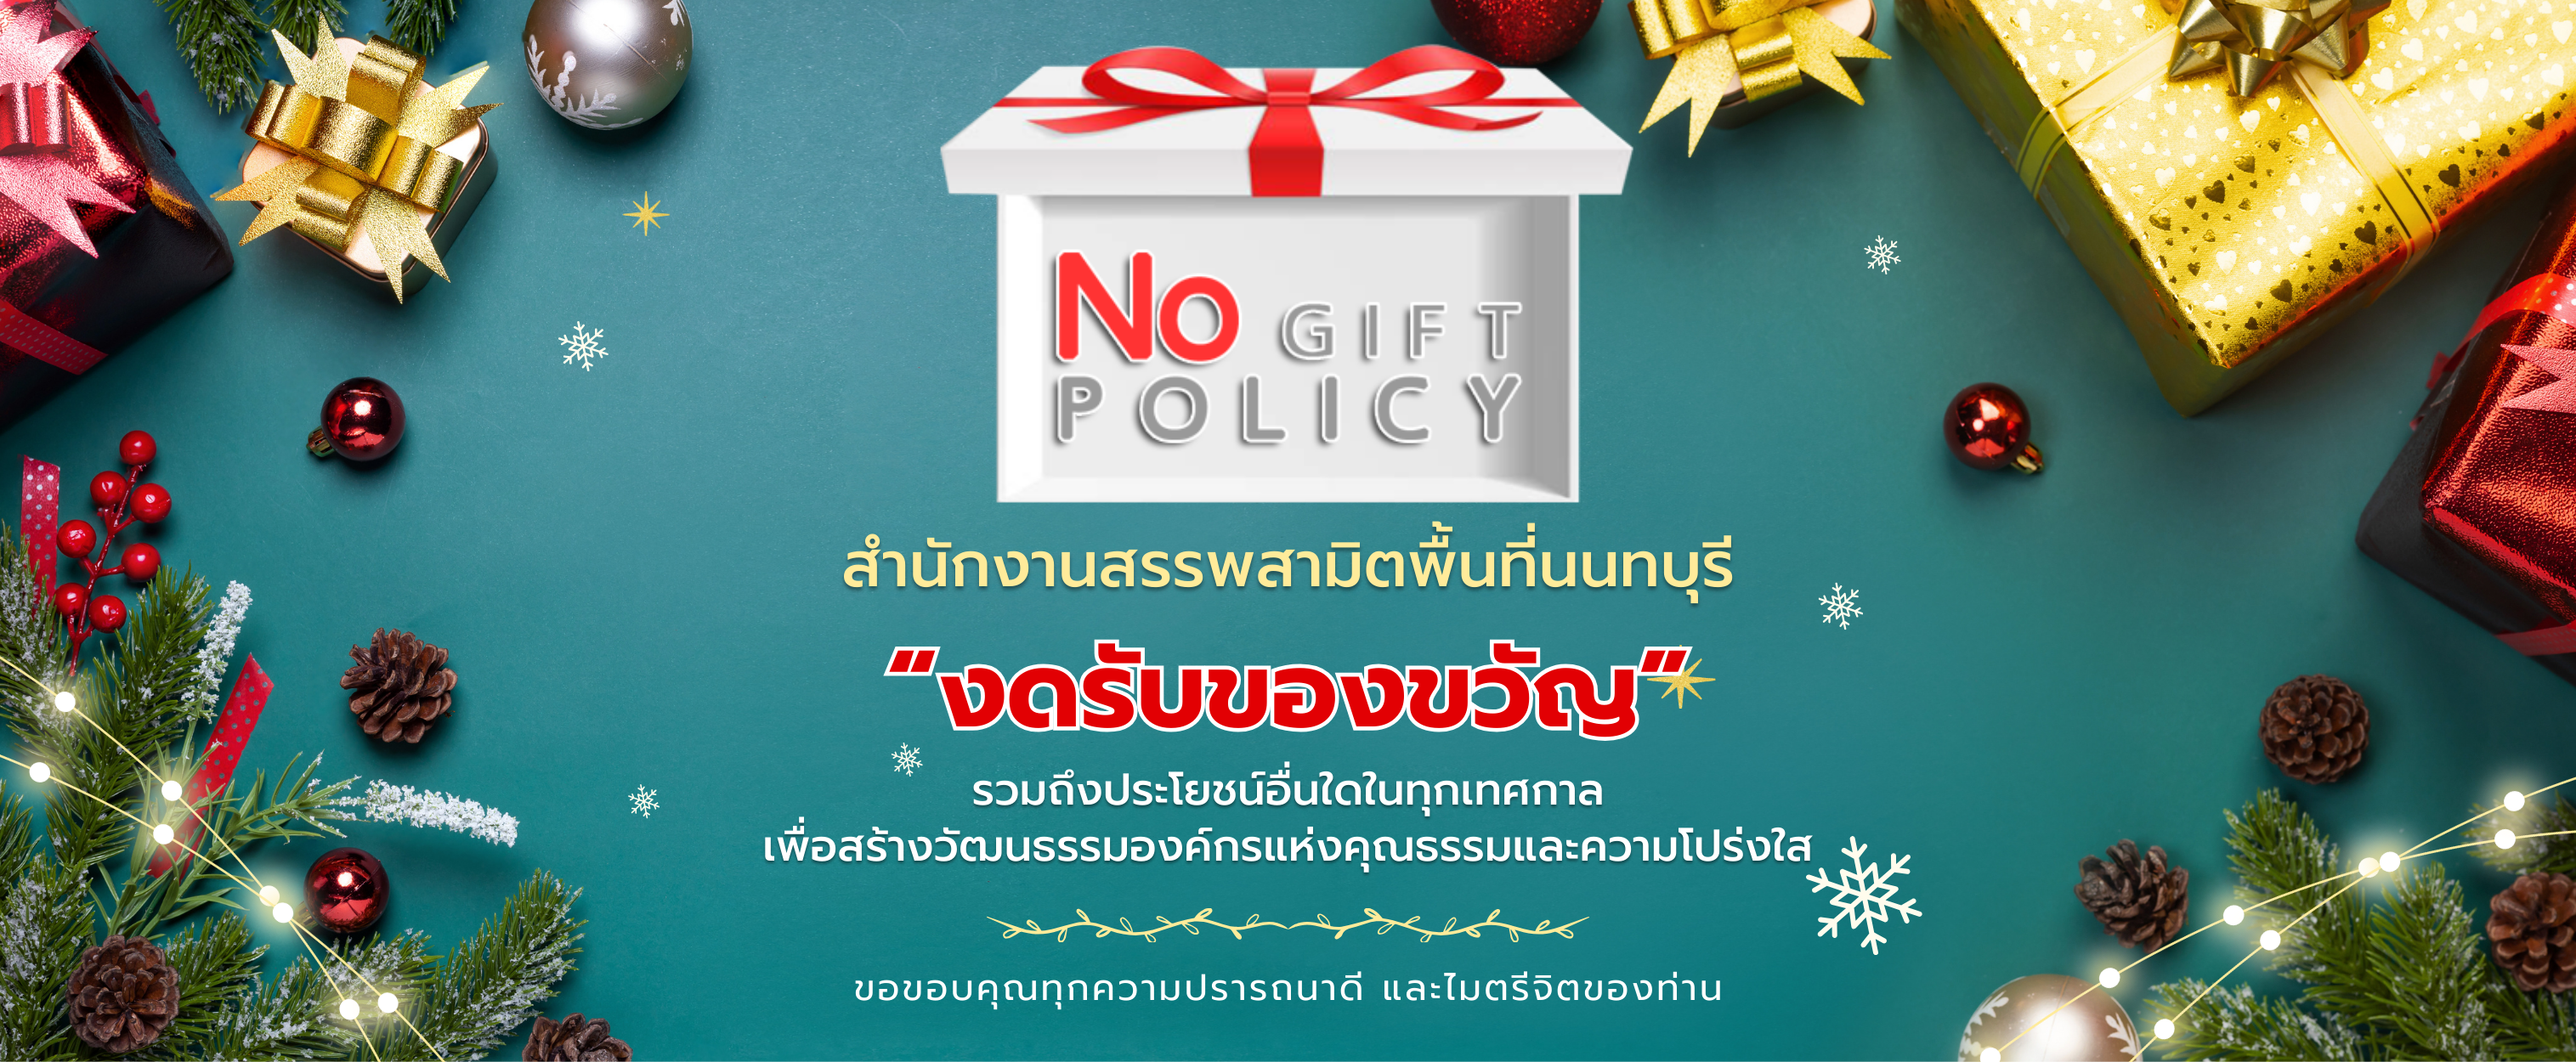 no gift - nonthaburi.png